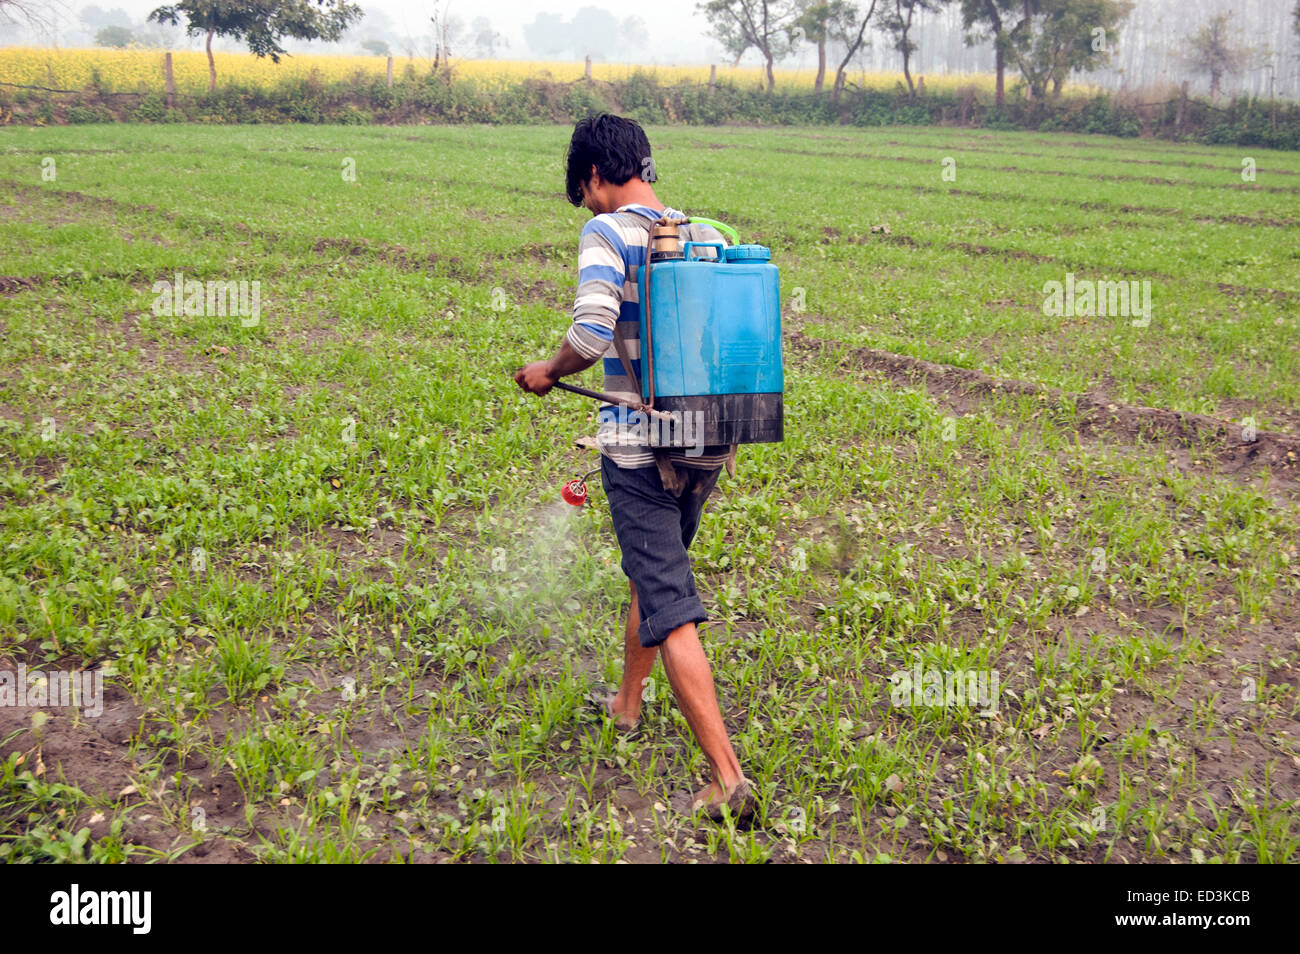 1 indian rural farmer farm Pesticide working Stock Photo